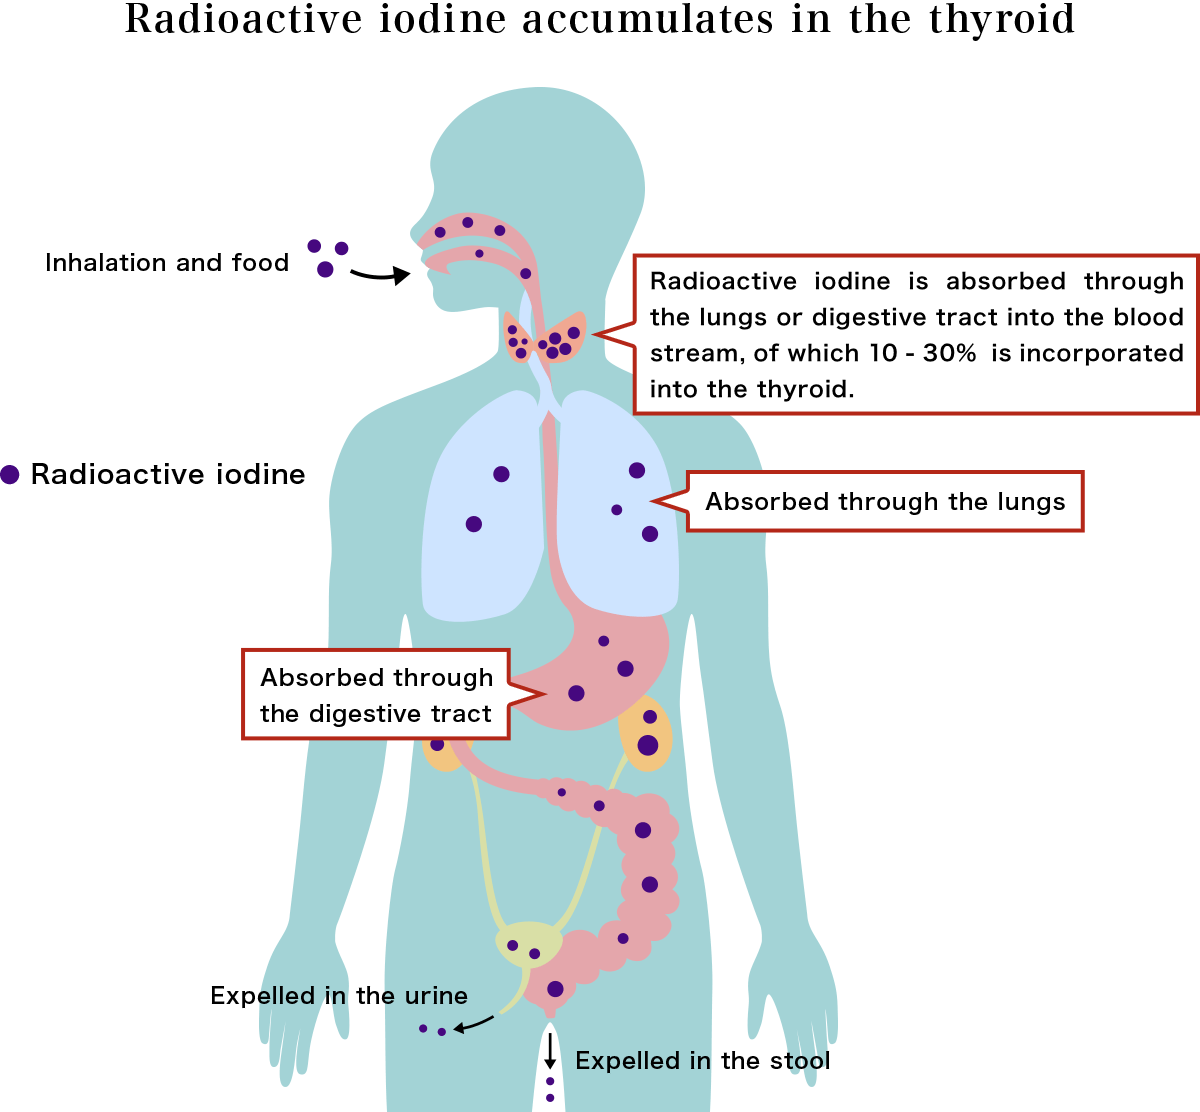 Radioactive iodine accumulates in the thyroid